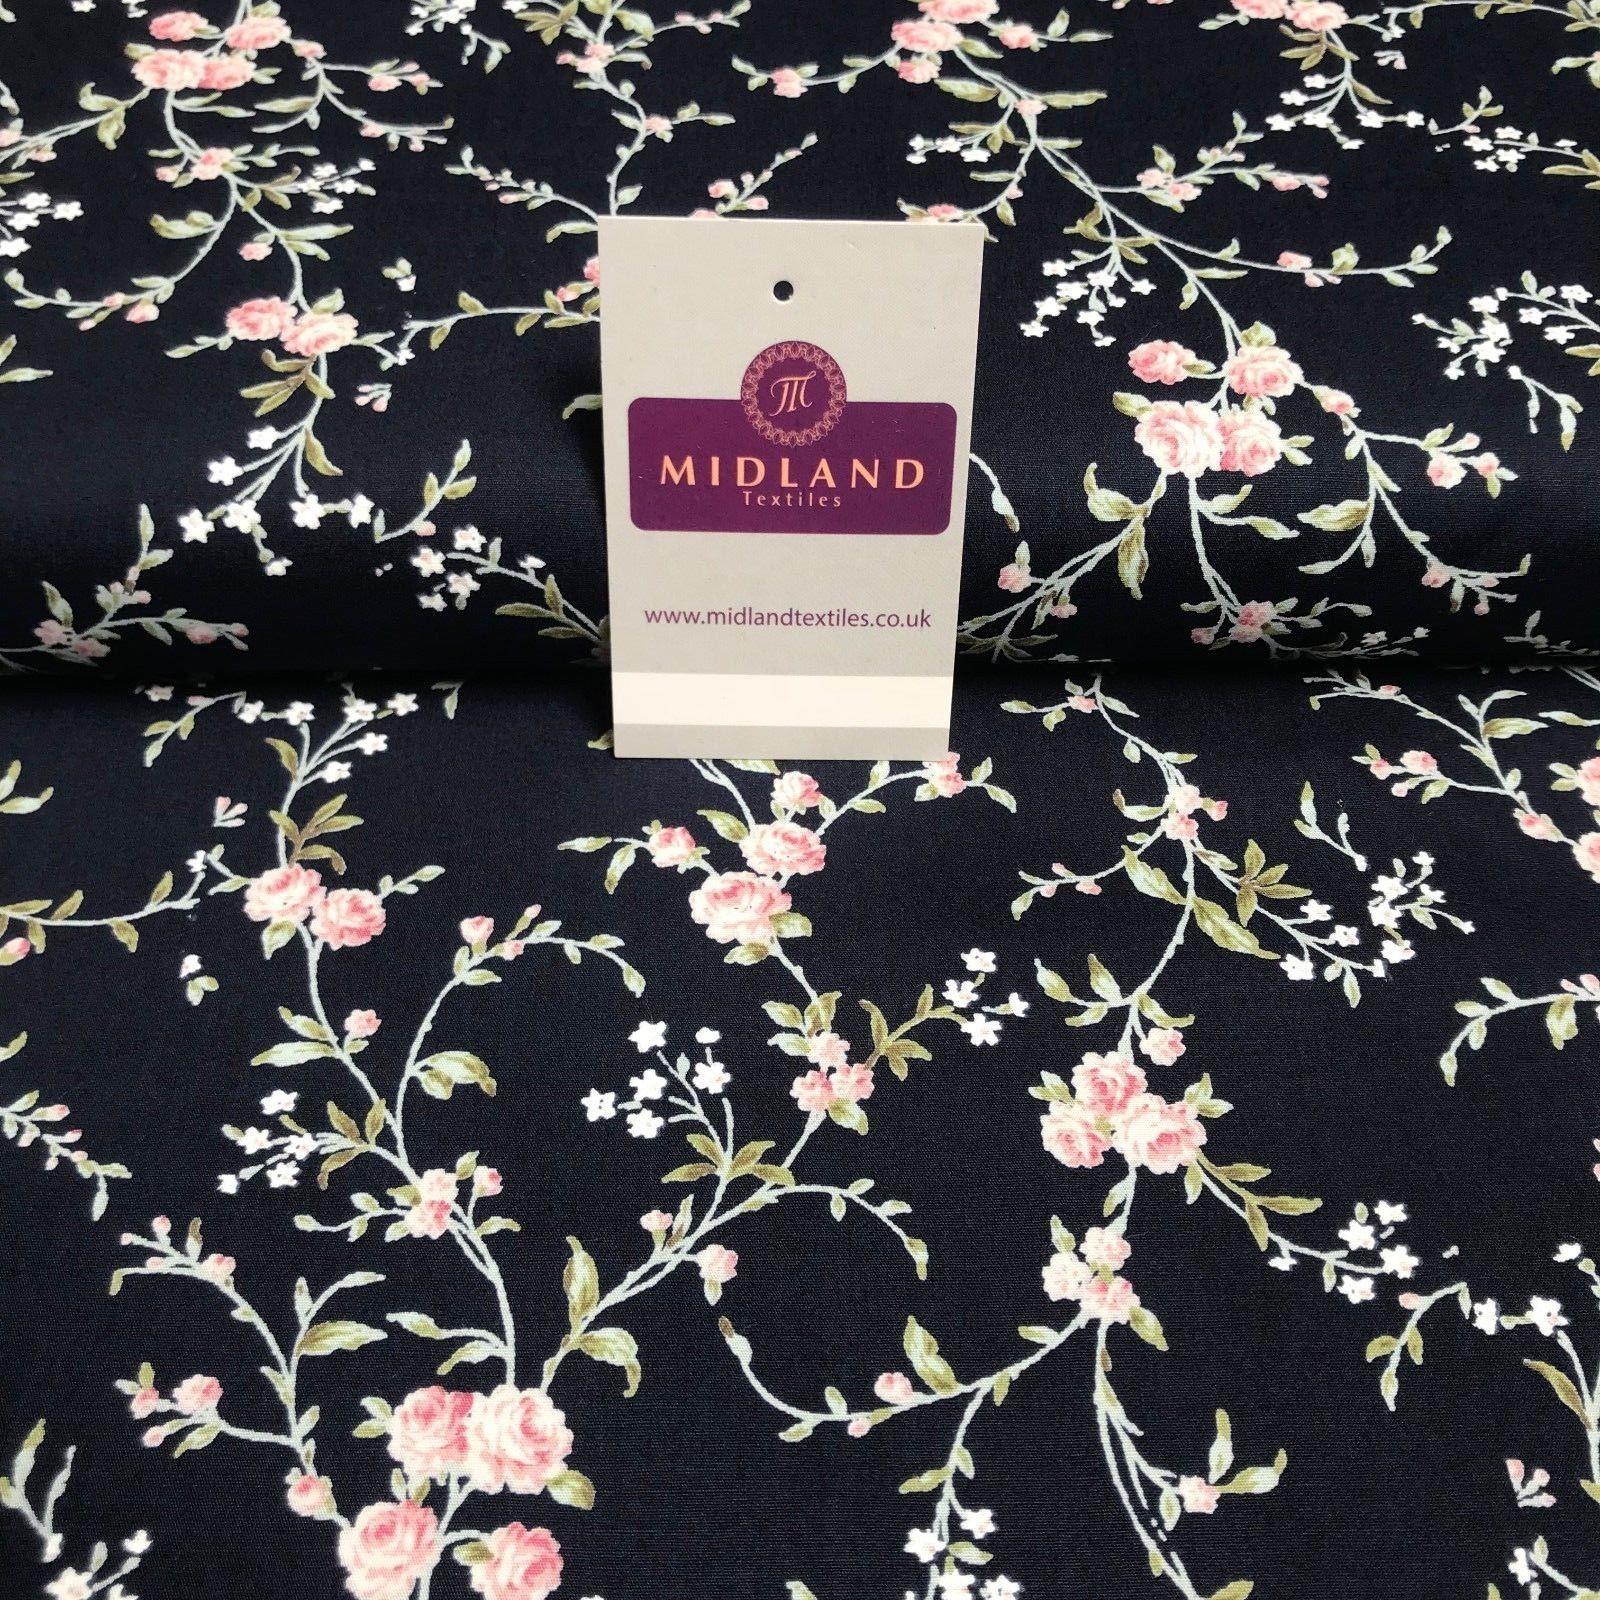 Vintage Floral Shabby Chic Printed Cotton Poplin Dress Fabric 44" wide MK894